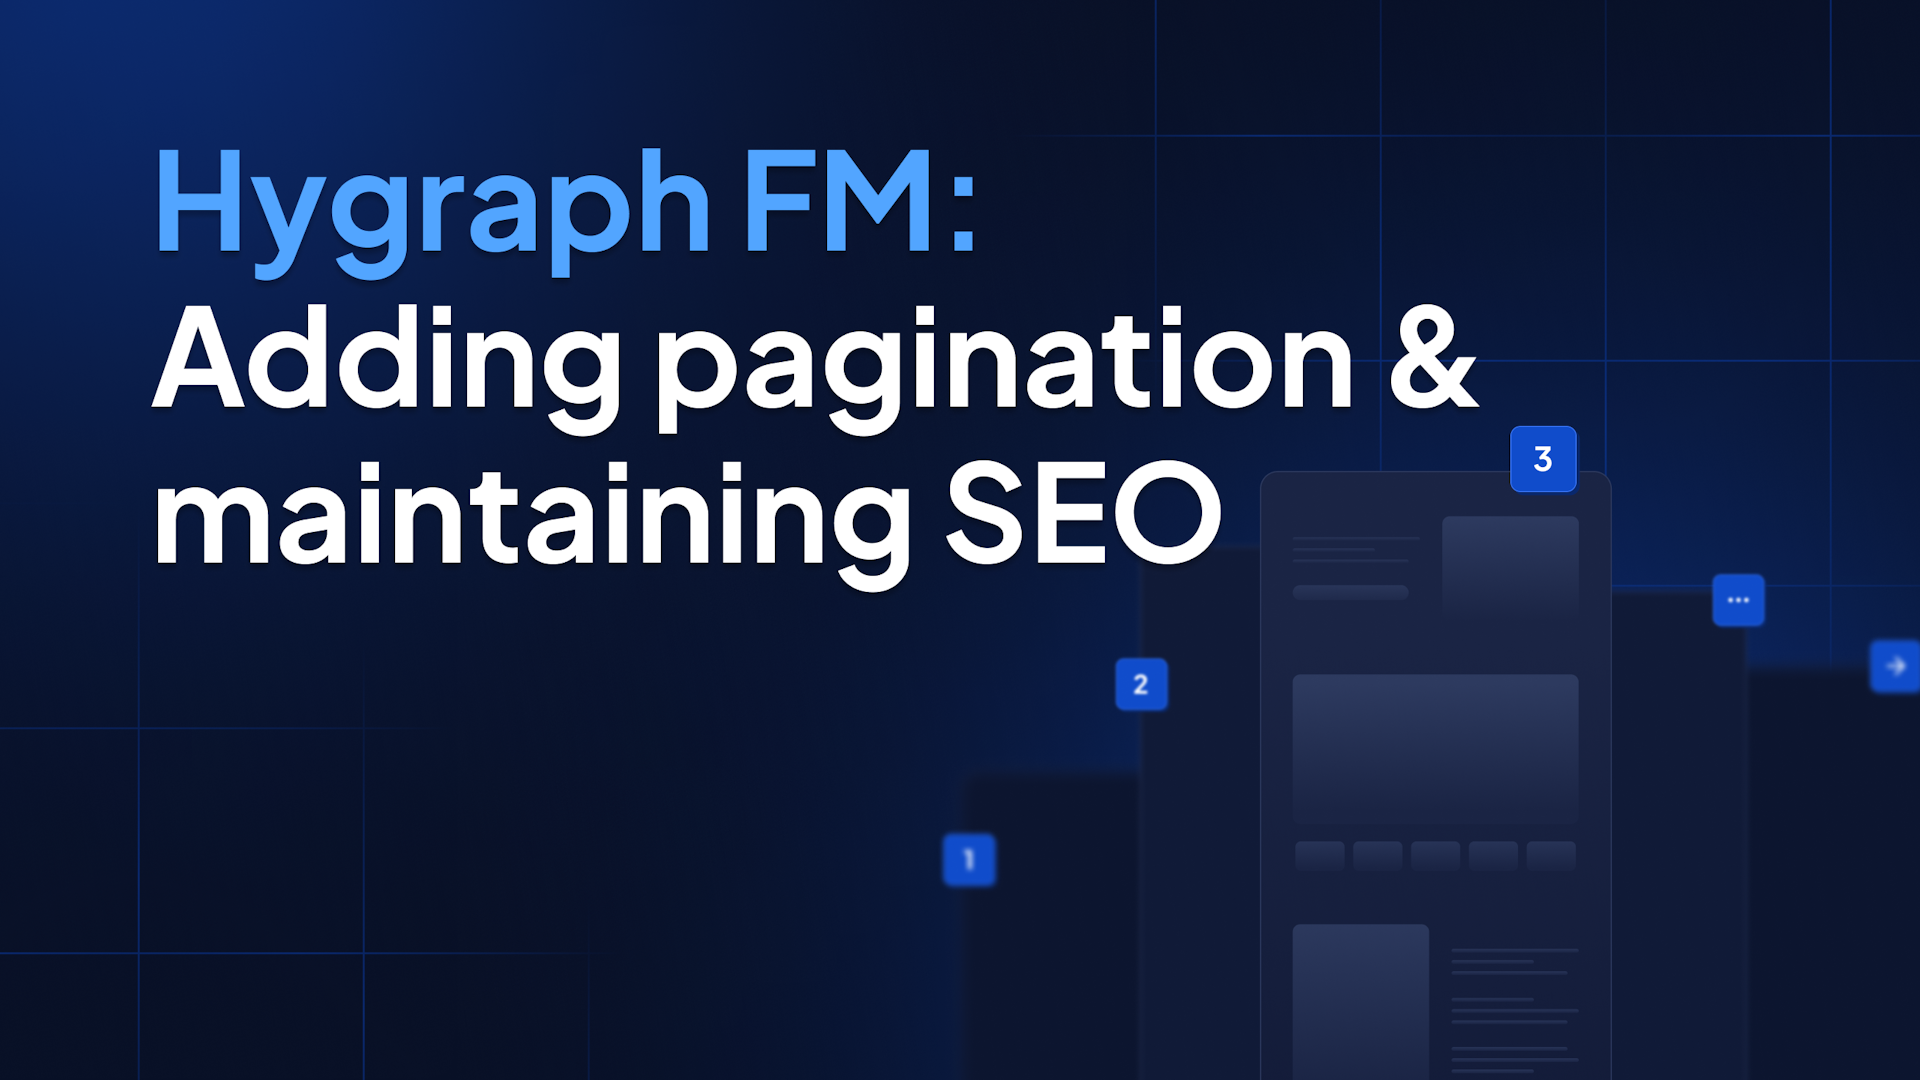 Hygraph FM Adding pagination and maintaining SEO